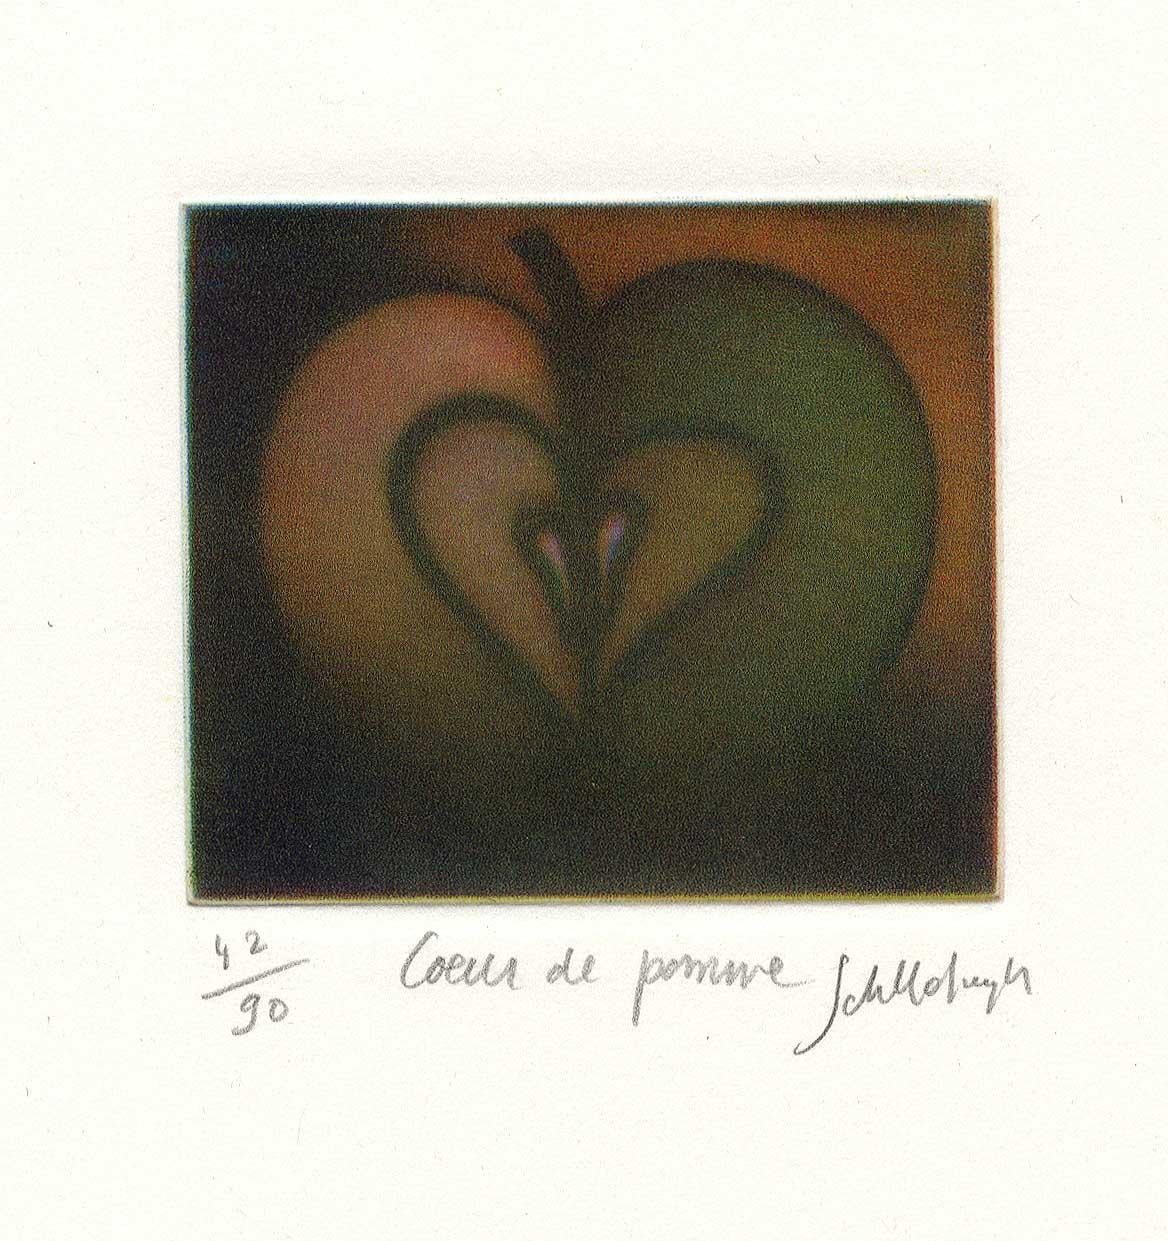 Coeur de Pomme (Heart of Apple) - Black Still-Life Print by Laurent Schkolnyk